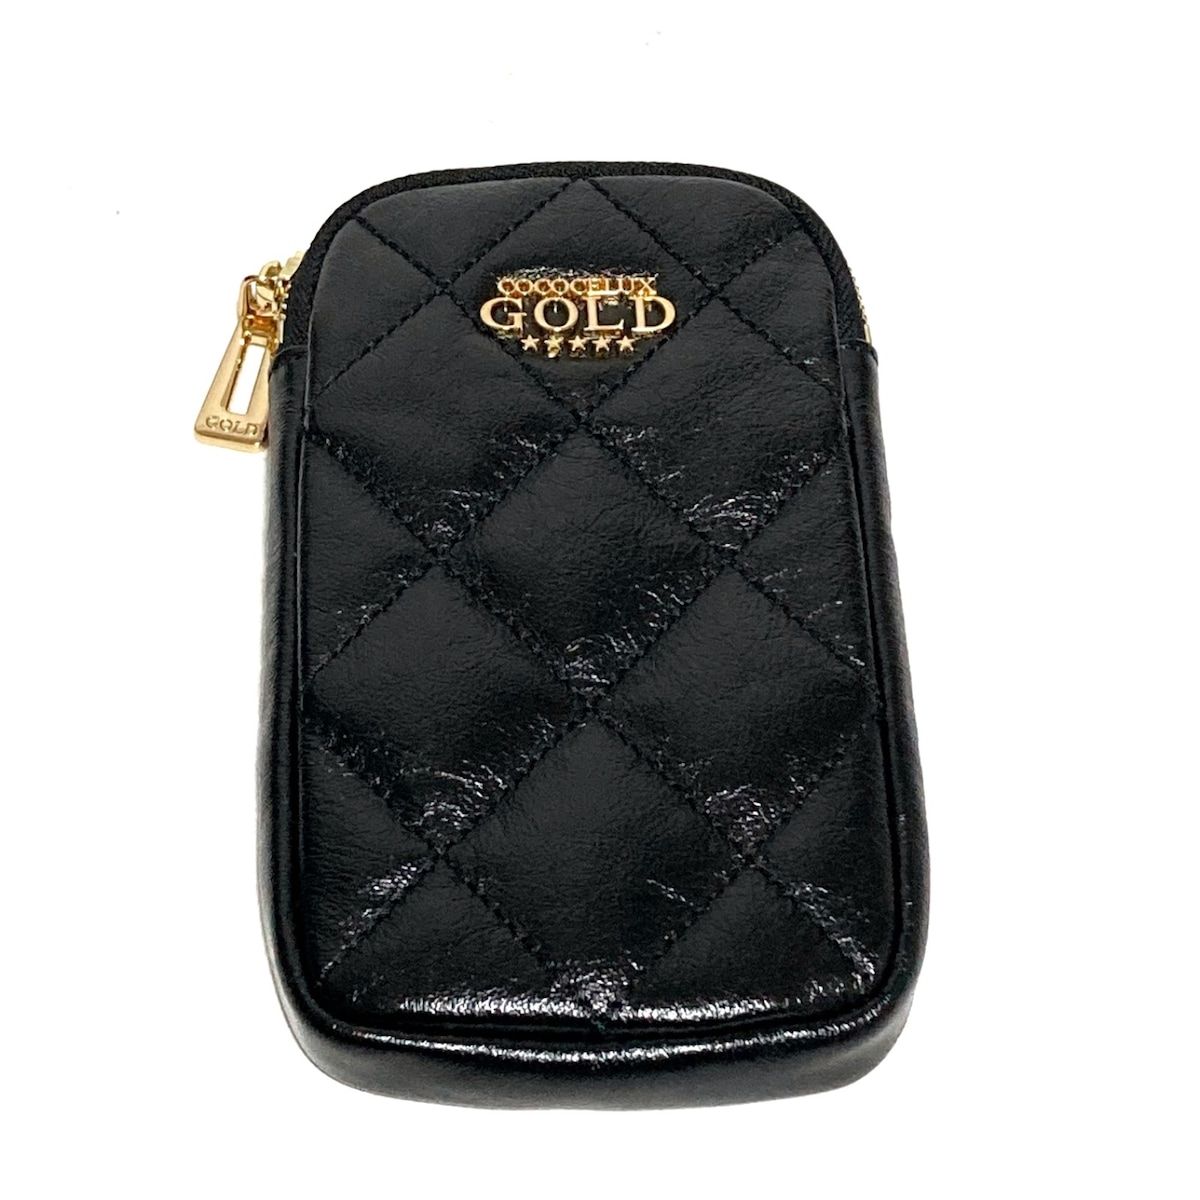 COCOCELUX GOLD(ココセリュックスゴールド) ハンドバッグ - 205DA0309 黒×レッド キルティング レザー - メルカリ